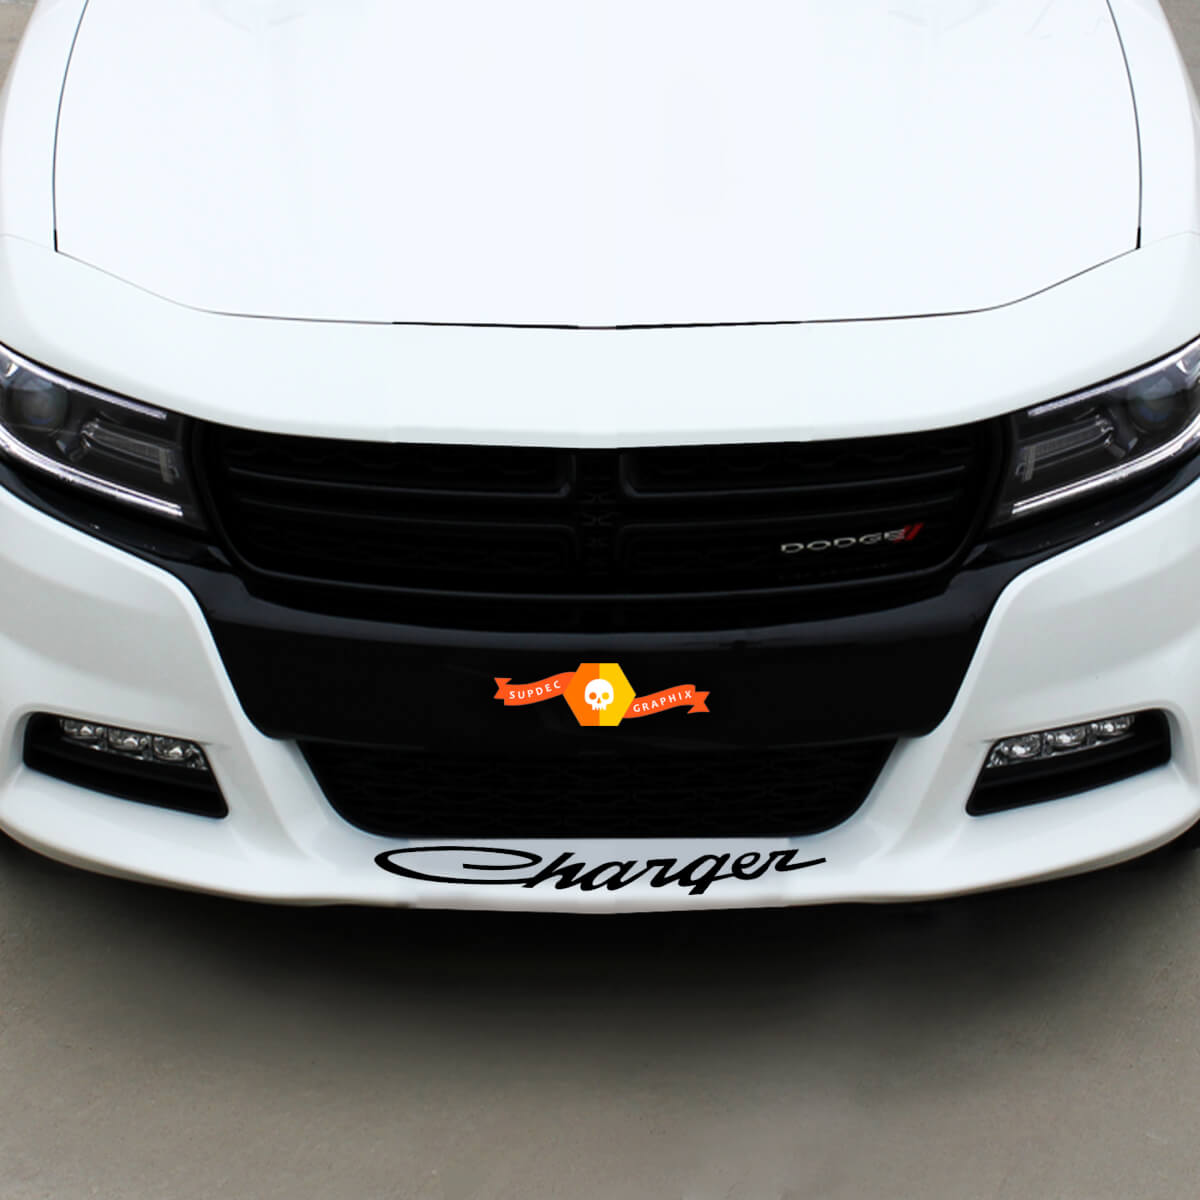 Dodge Charger Retro Front Spoiler Aufkleber Aufkleber Grafiken passt zu allen Modellen